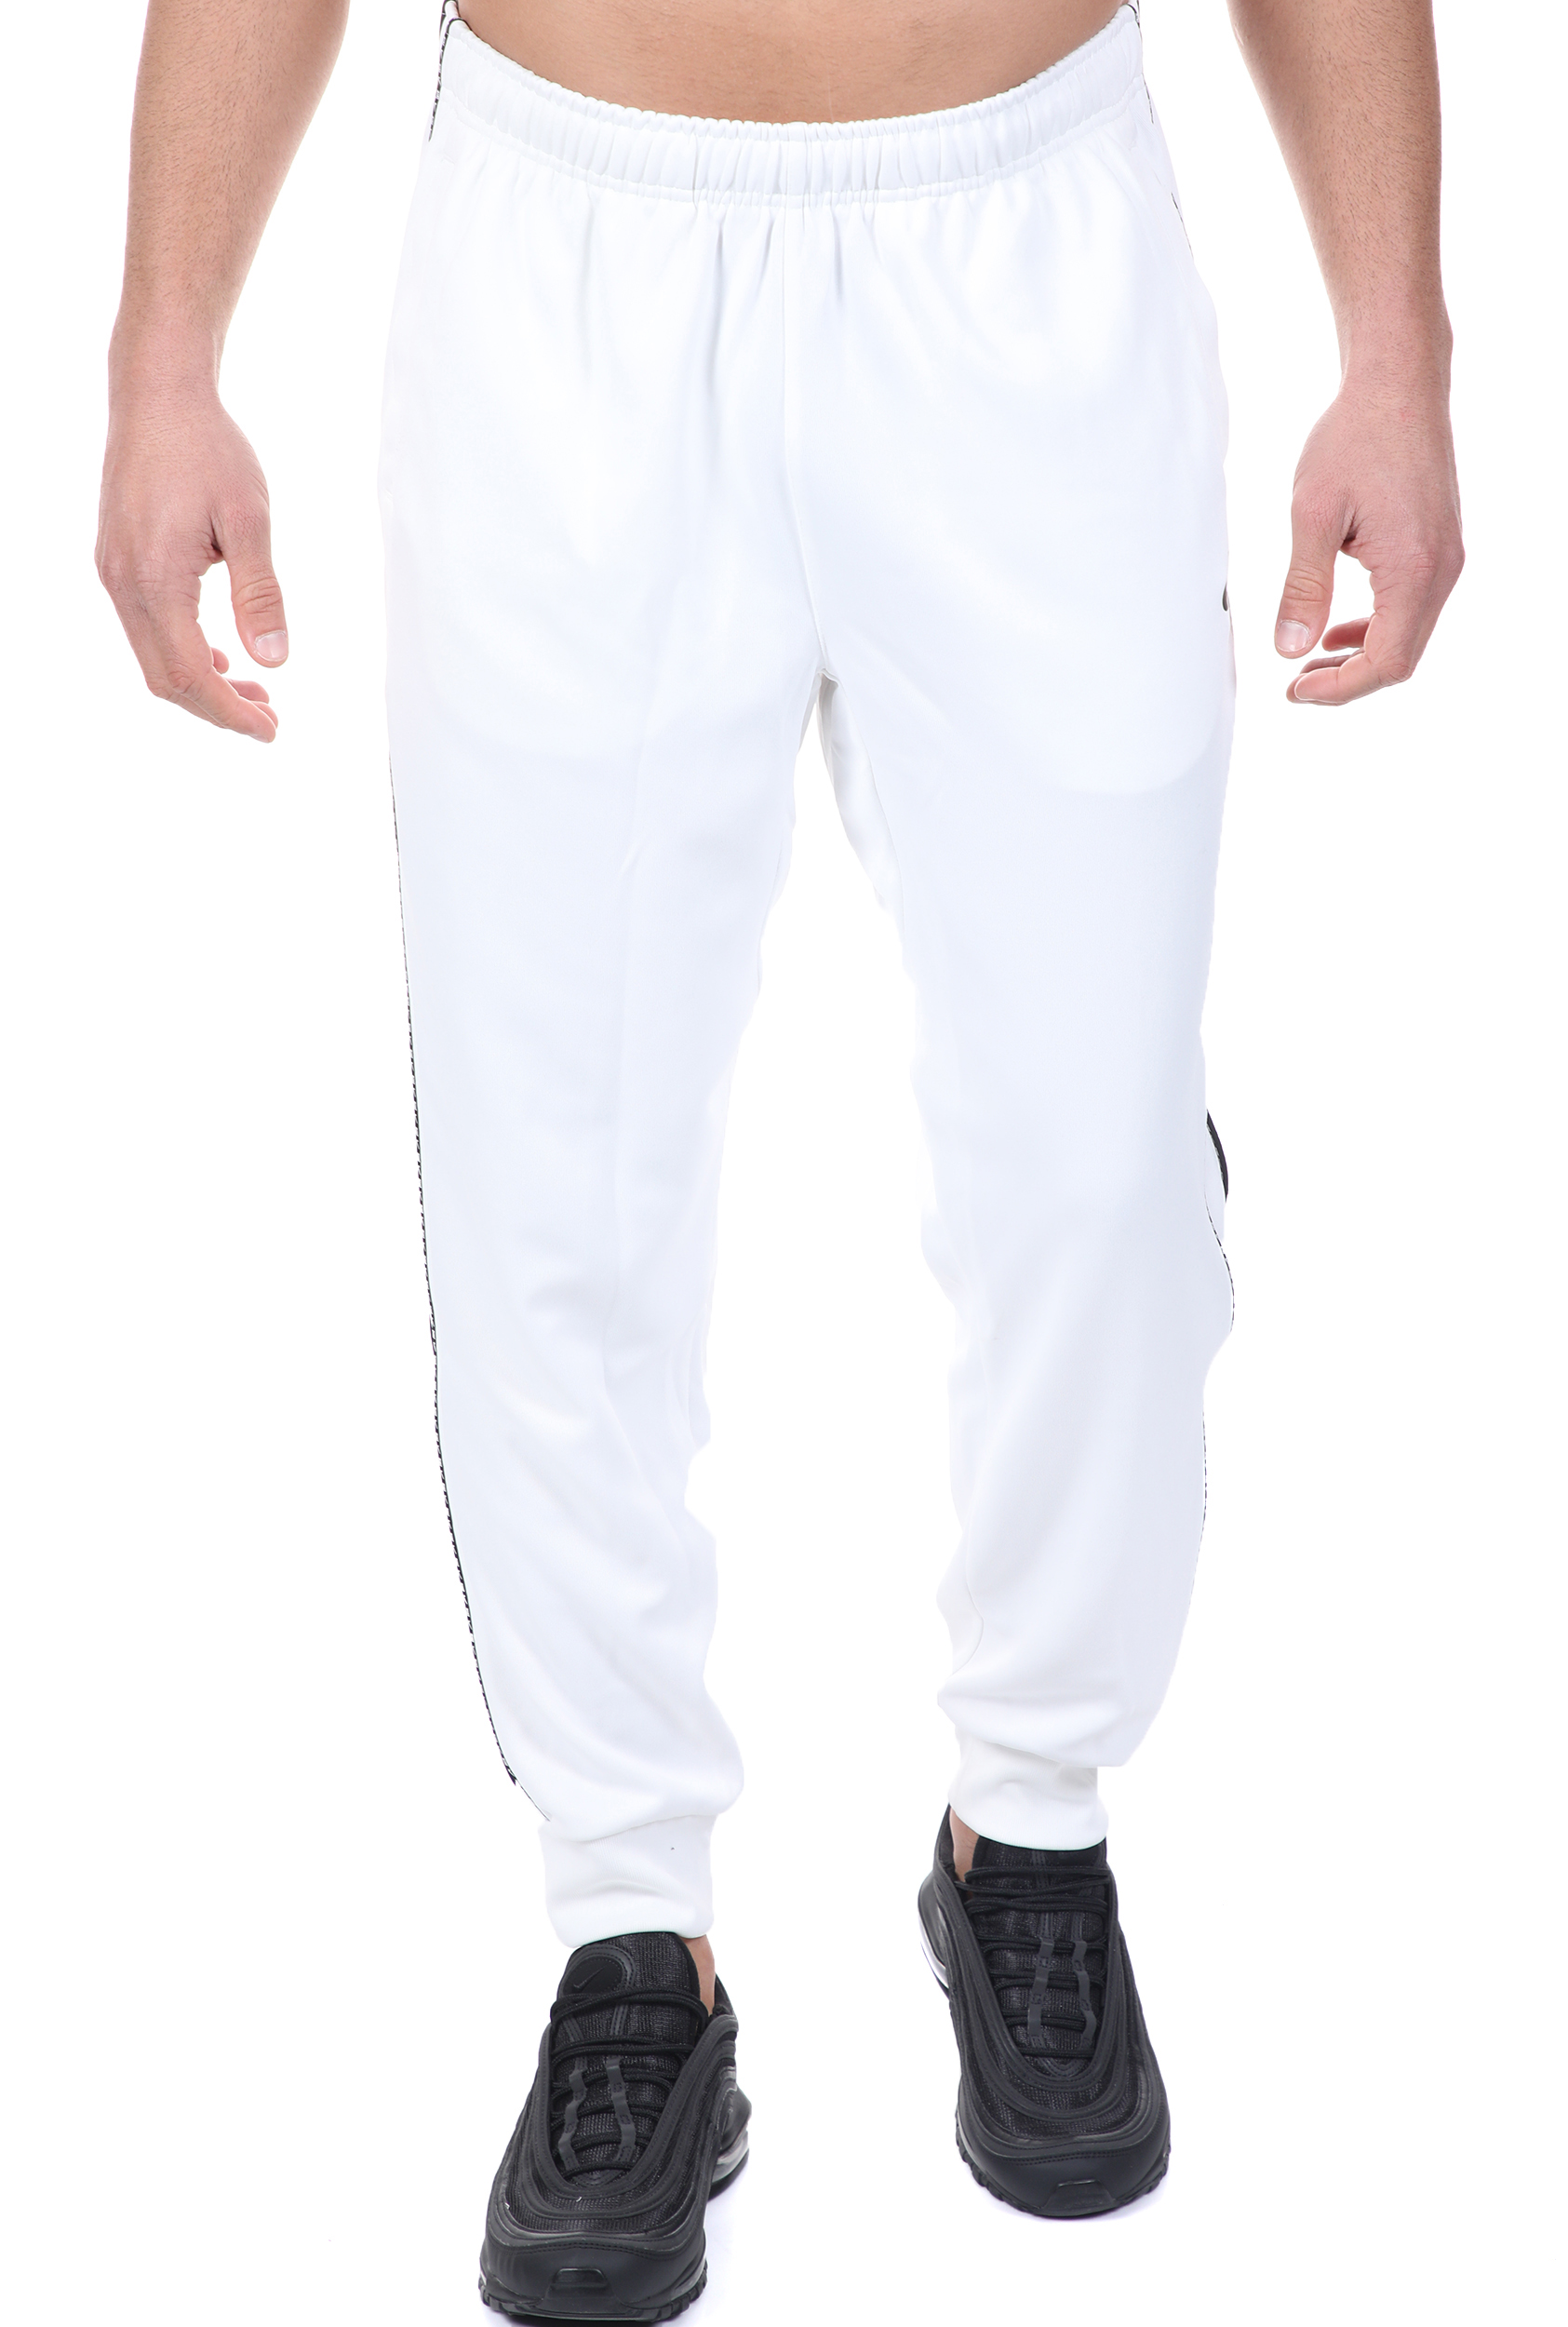 NIKE - Ανδρικό παντελόνι φόρμας NIKE NSW REPEAT PK JGGR λευκό